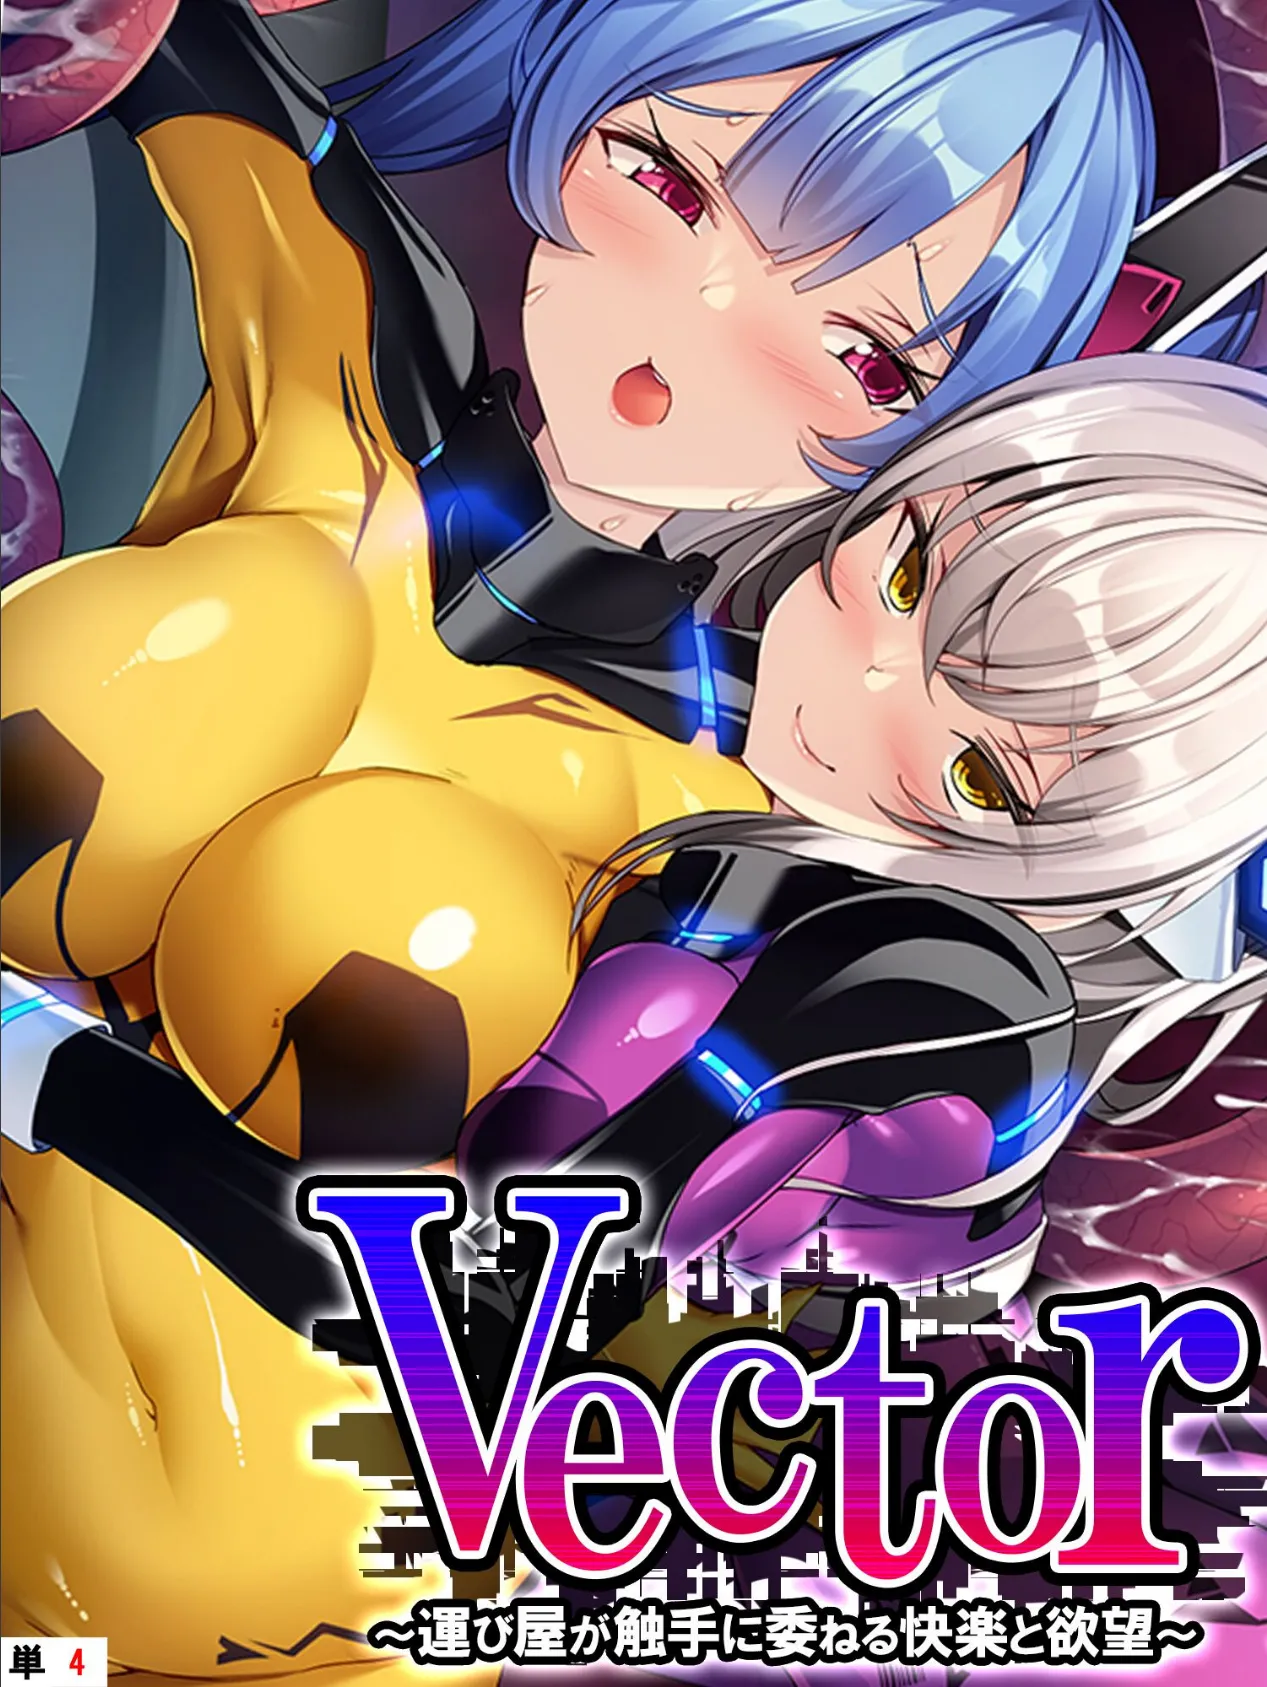 Vector 〜運び屋が触手に委ねる快楽と欲望〜 【単話】 第4話